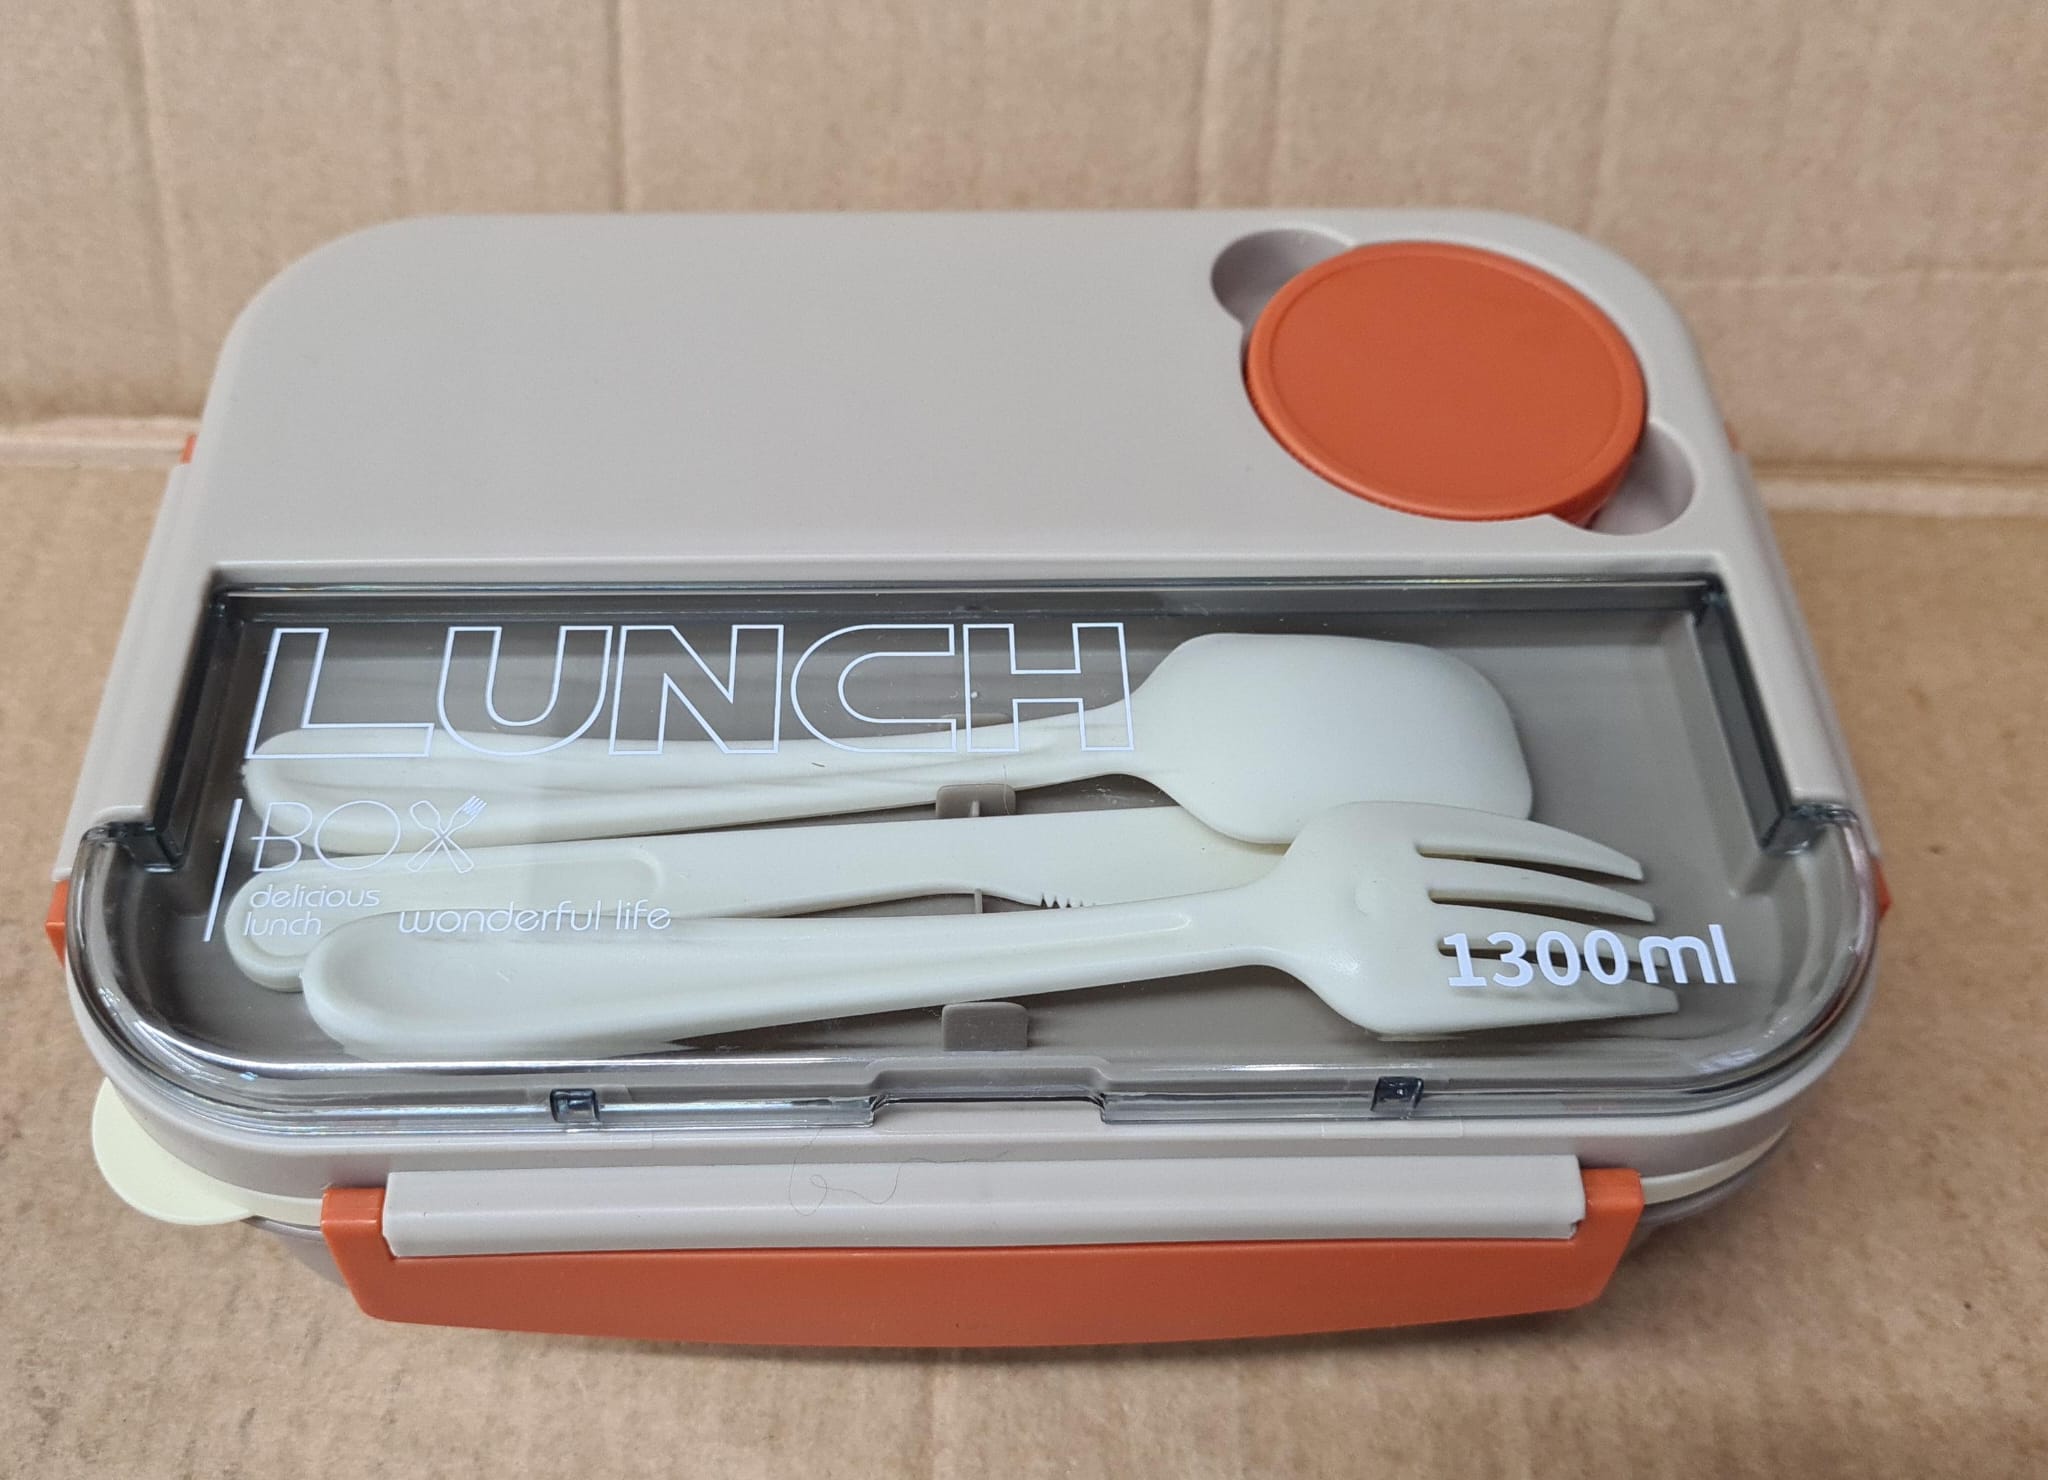 1300ml Bento Box Lunch Box-1300